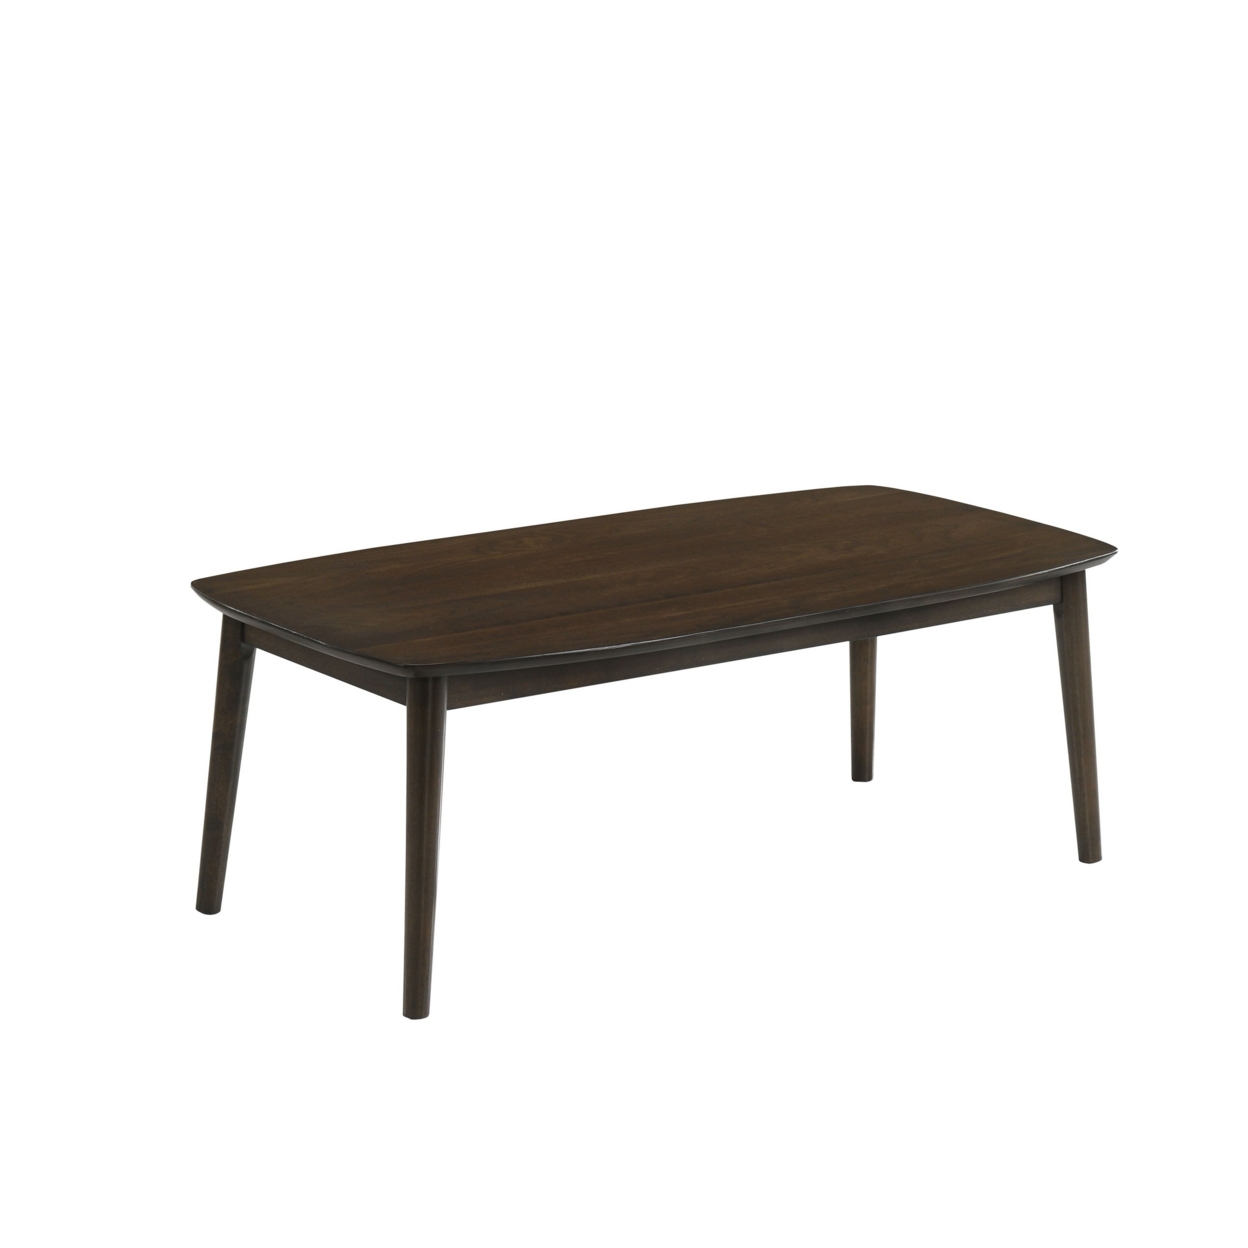 Lexi 47 Inch Coffee Table, Dark Walnut Brown Wood, Rounded Splayed Legs- Saltoro Sherpi